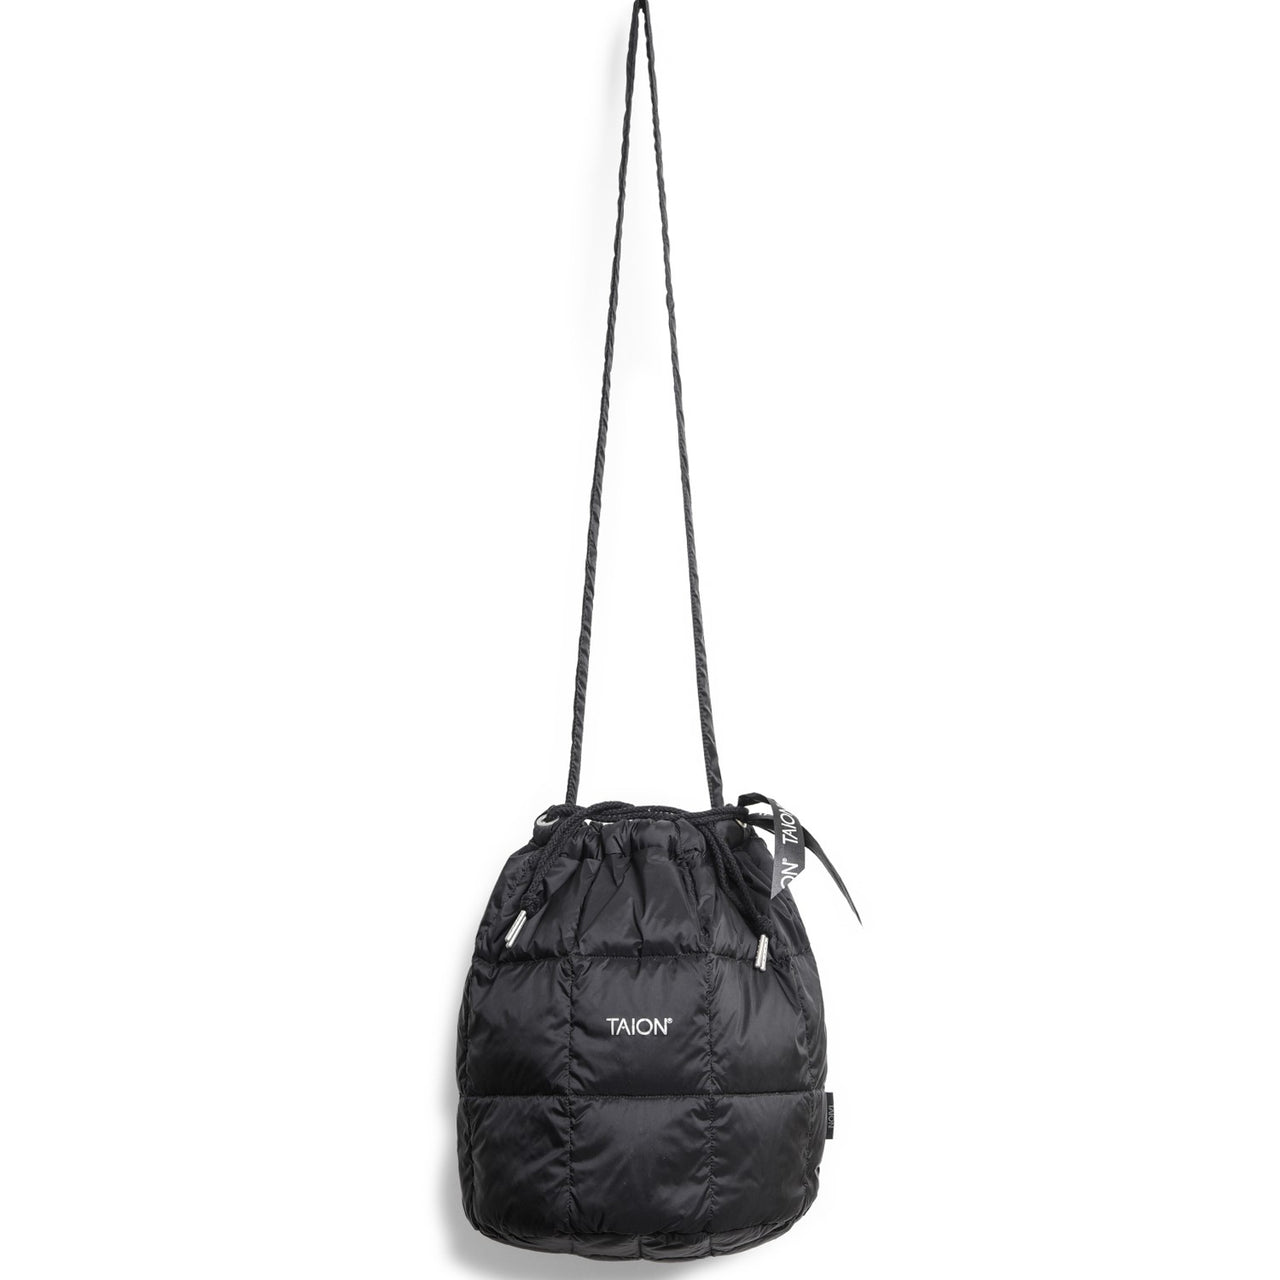 Drake General Store - TAION Draw String Down Bag - Black